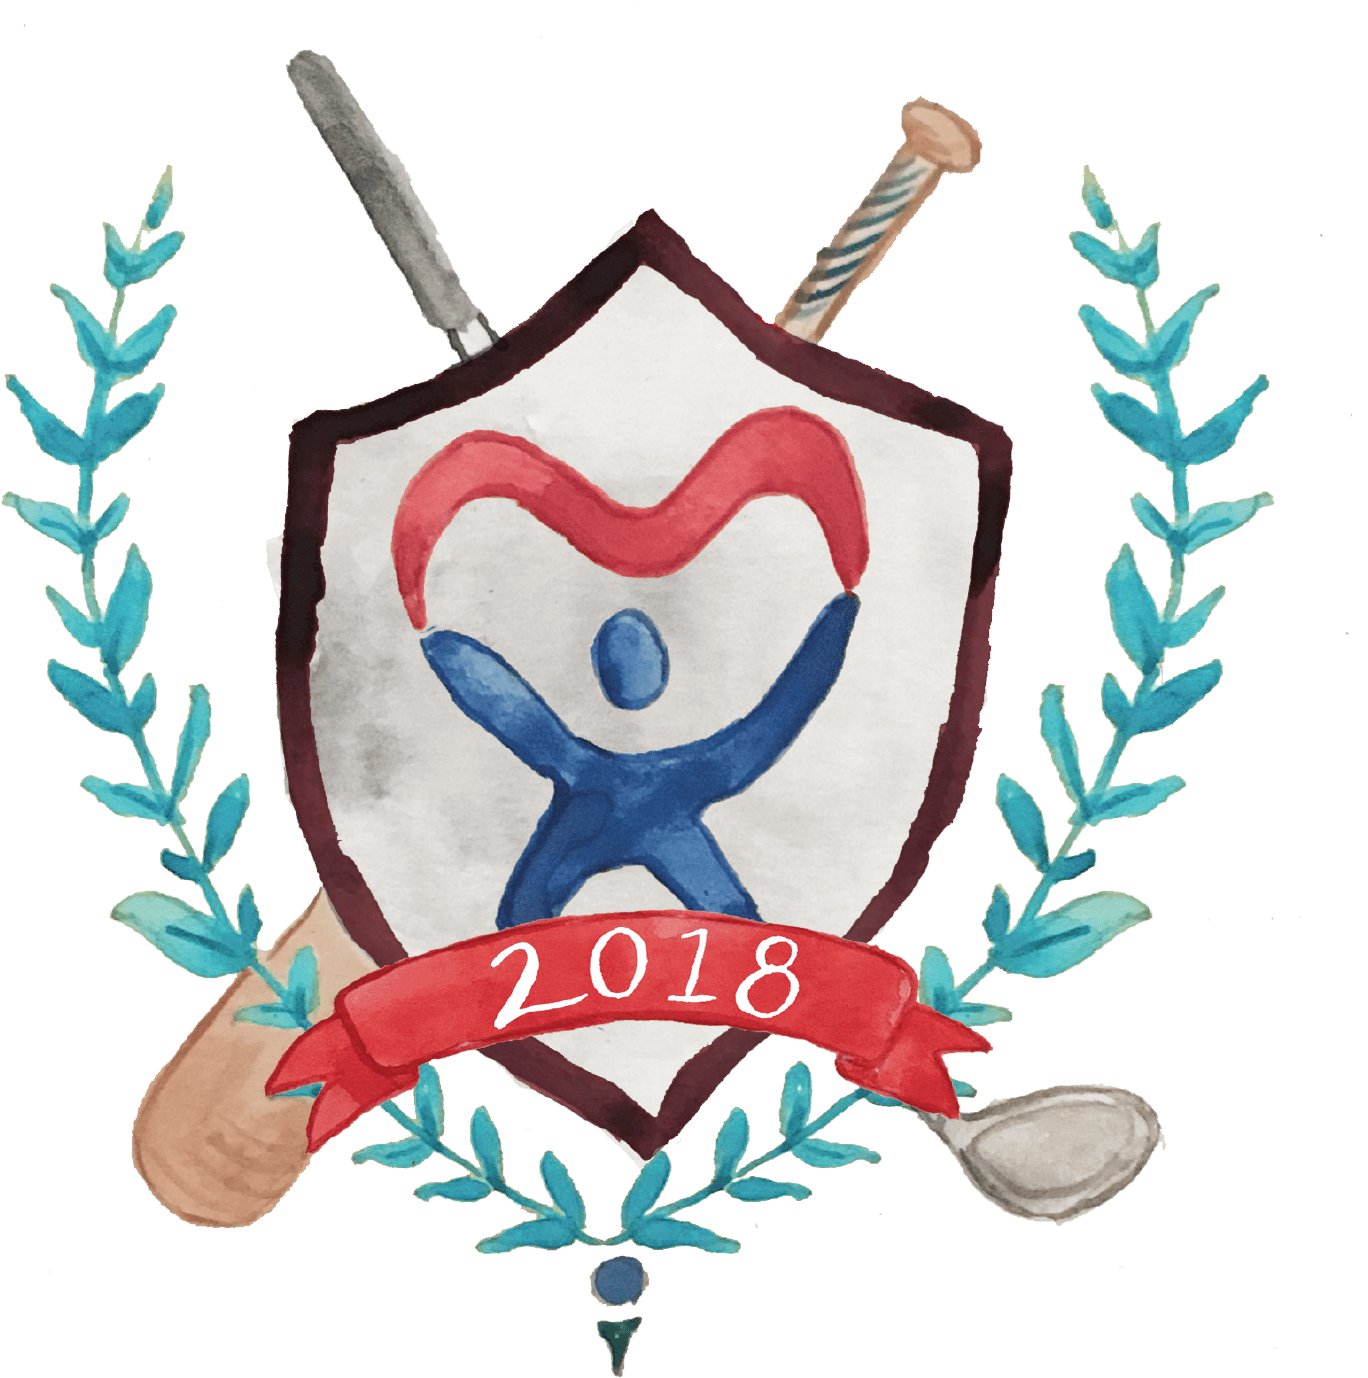 The 13th Annual Rob Childress Charity Golf Tournament - Emblem (1500x1500)